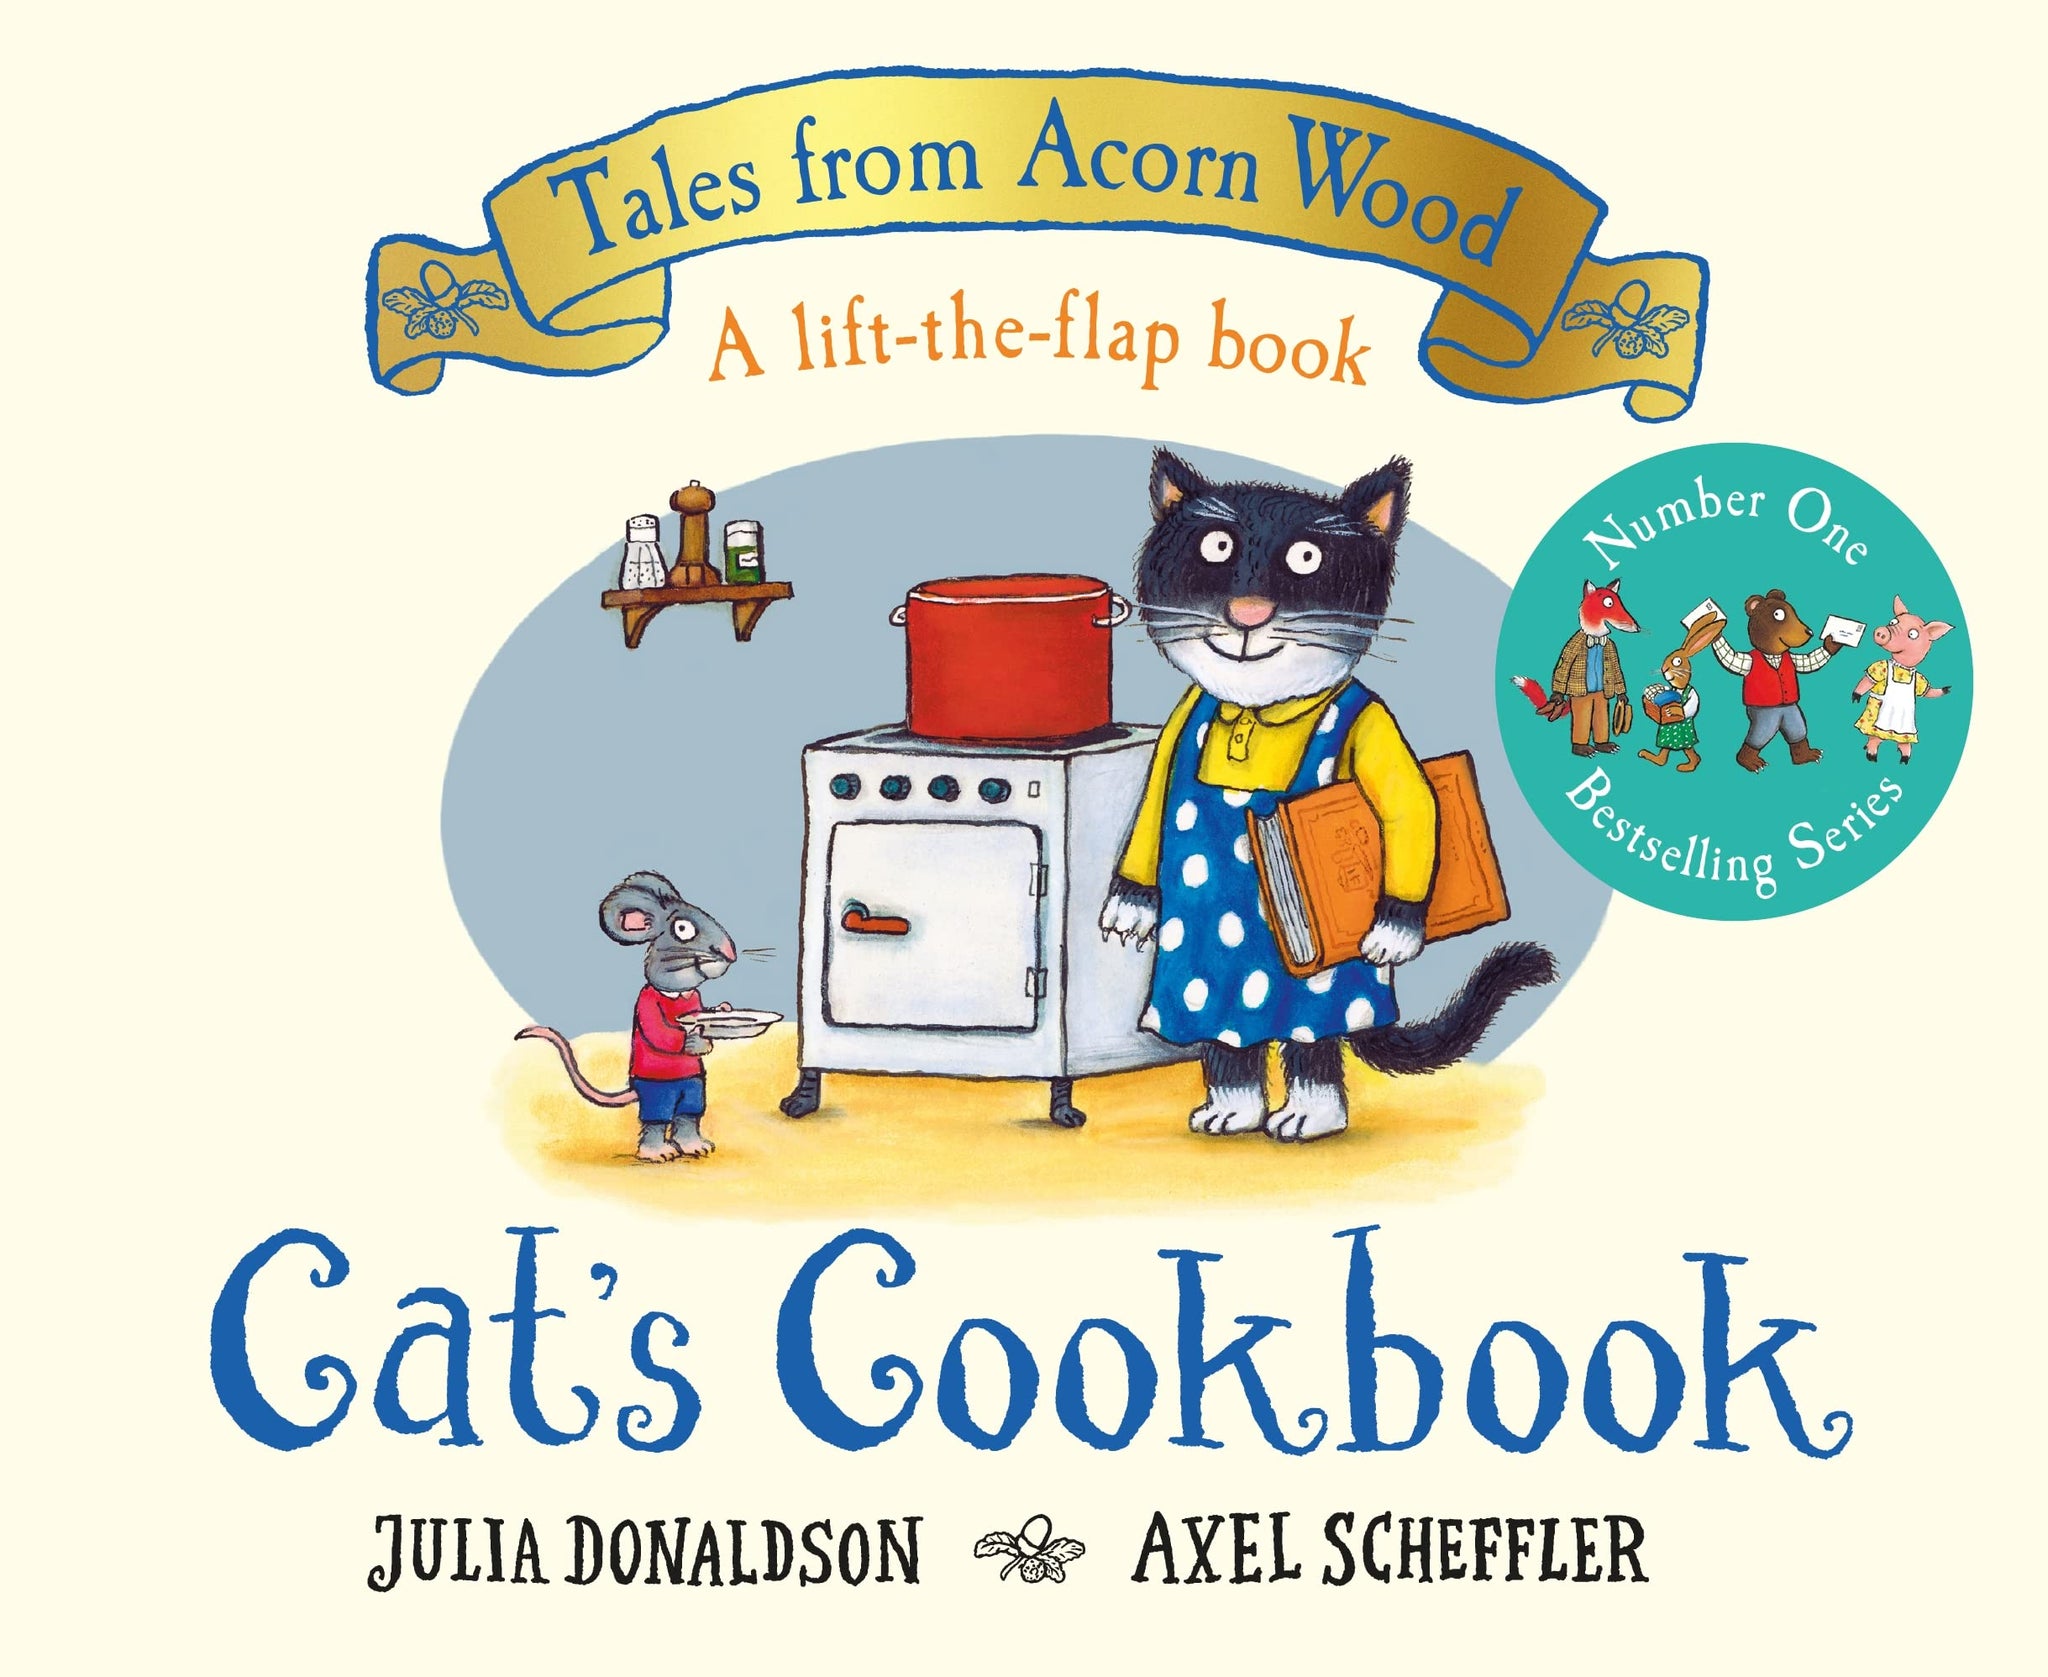 Cat's Cookbook: Tales from Acorn Wood